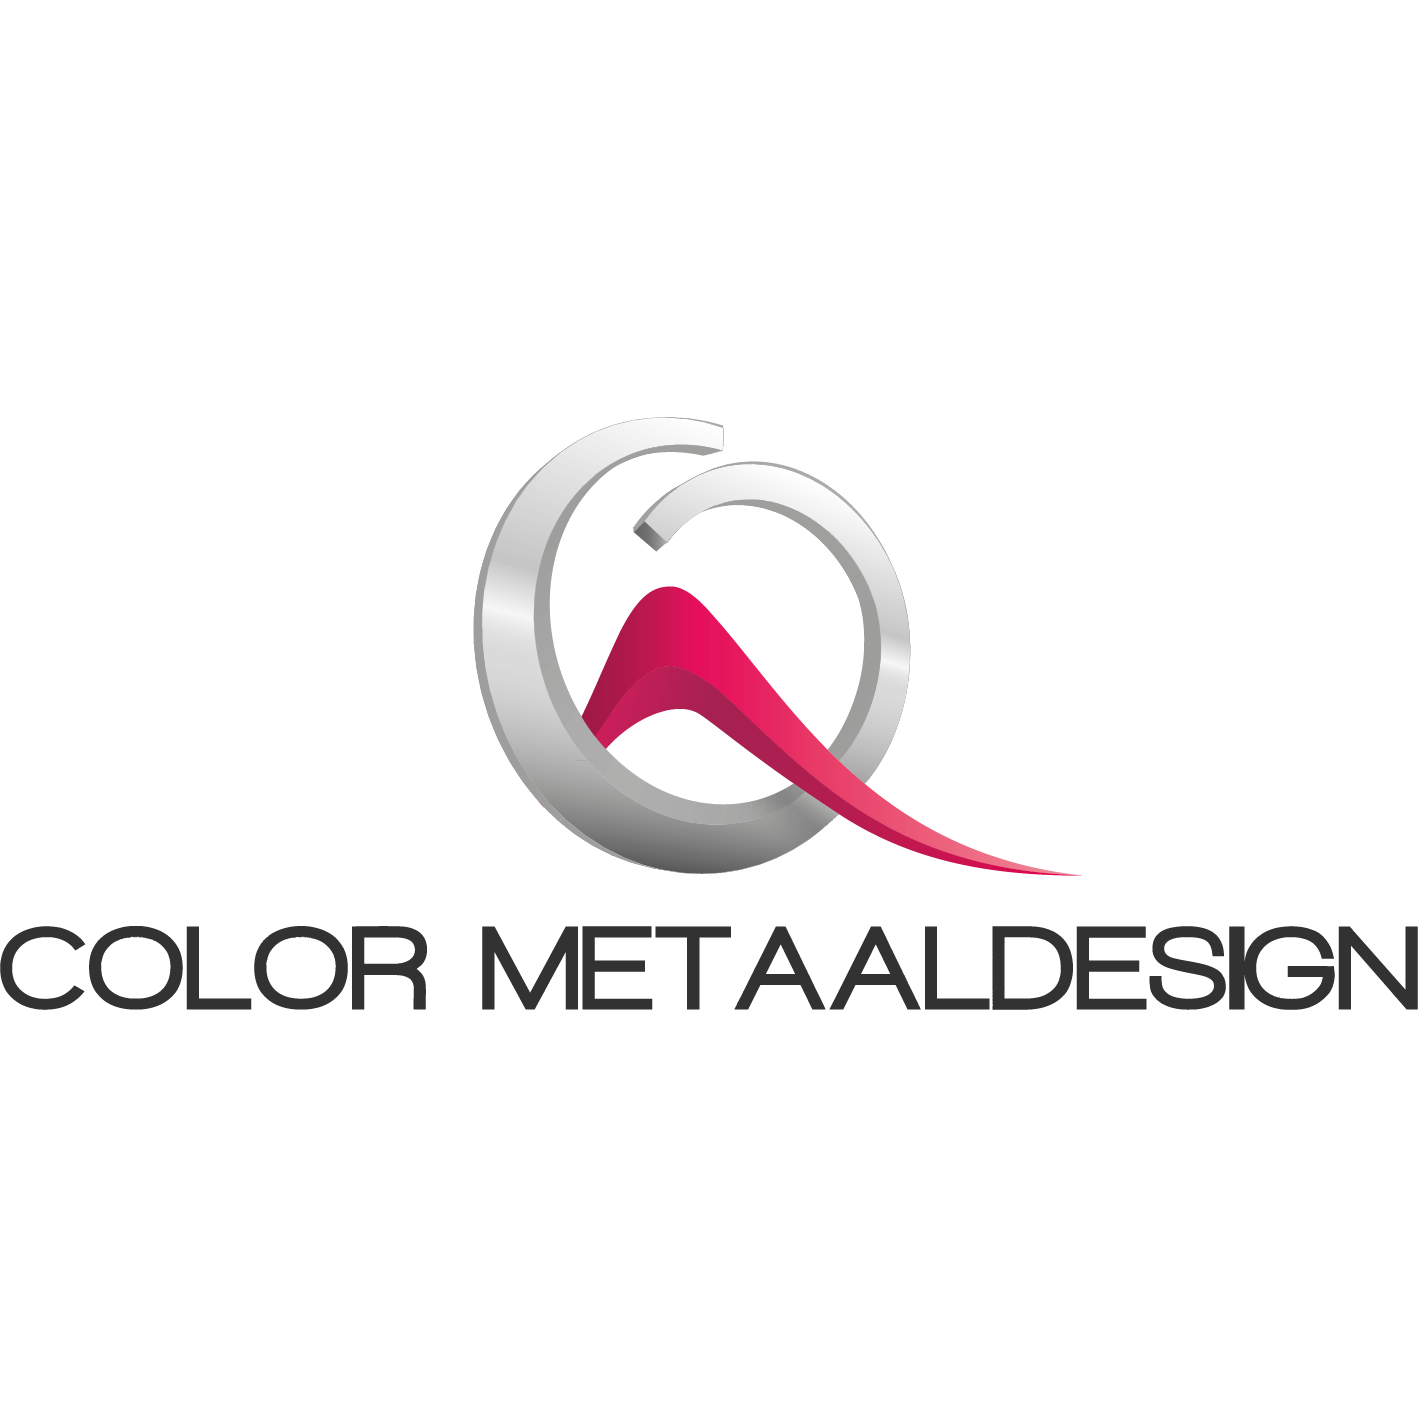 Color Metaaldesign